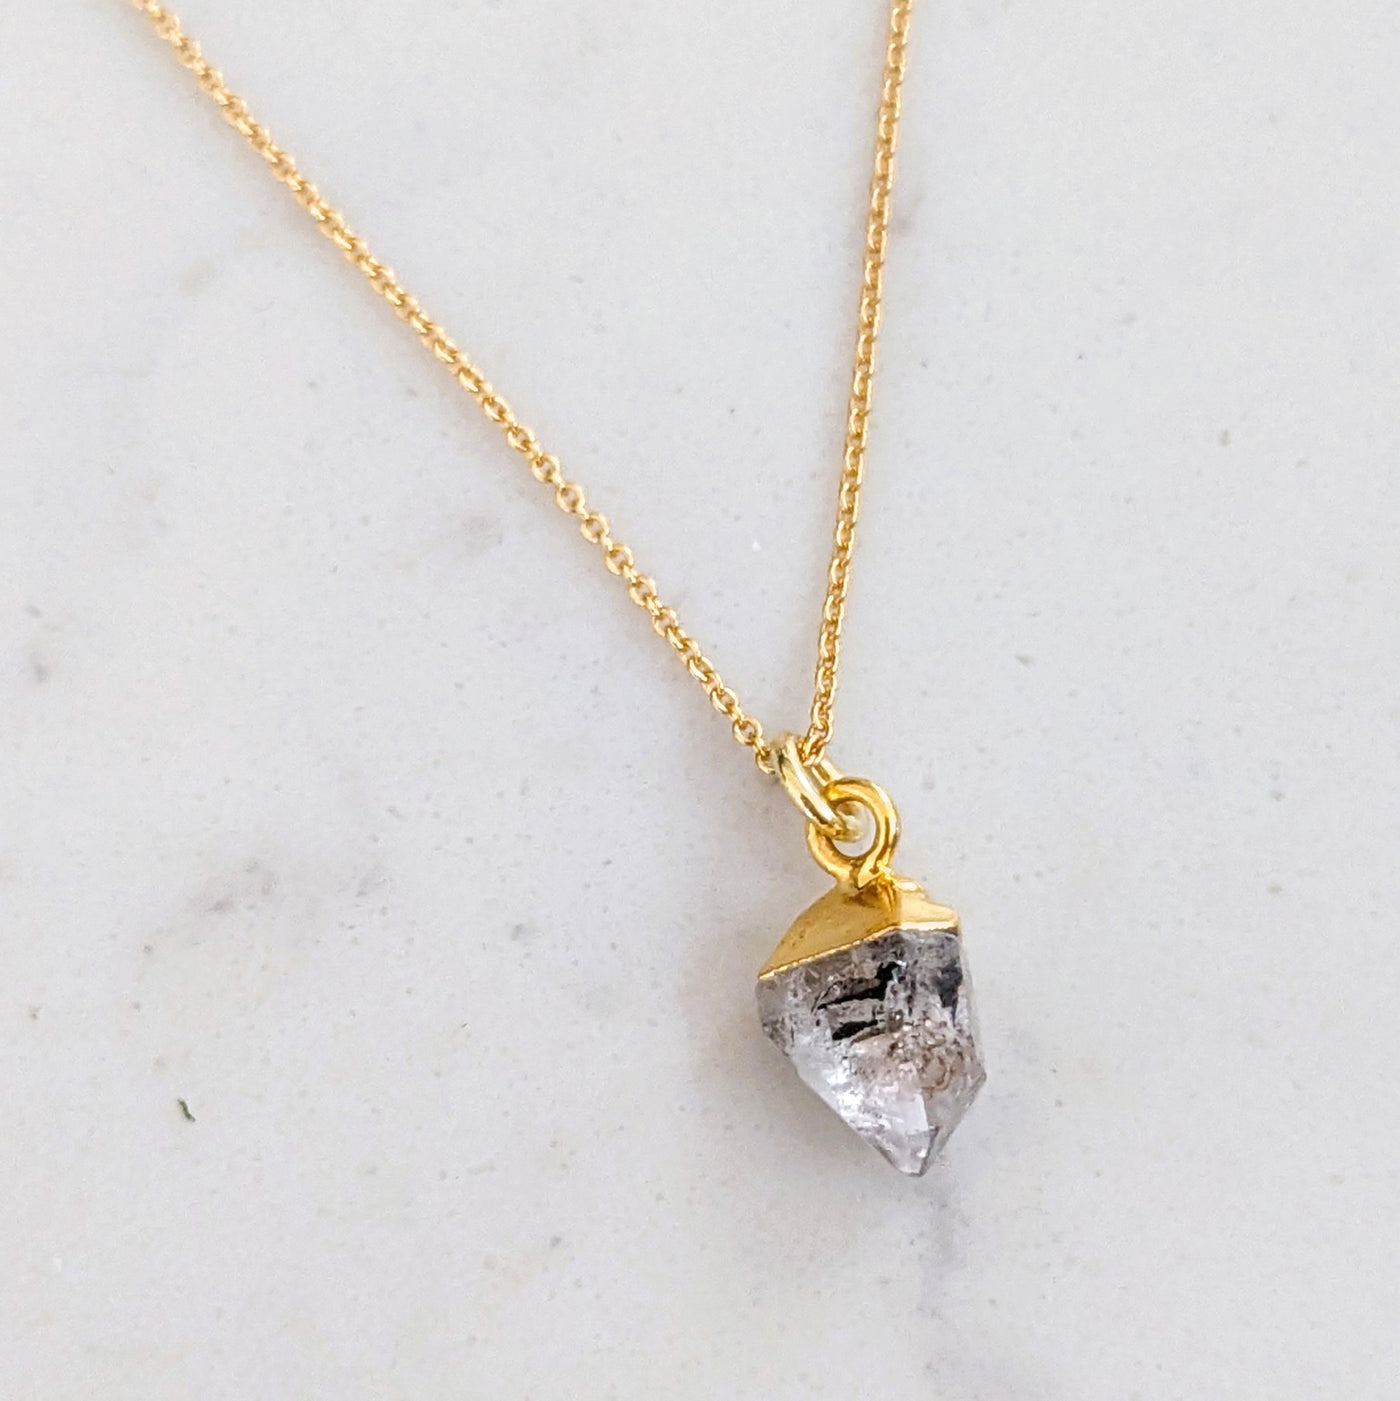 Herkimer Diamond April birthstone pendant necklace